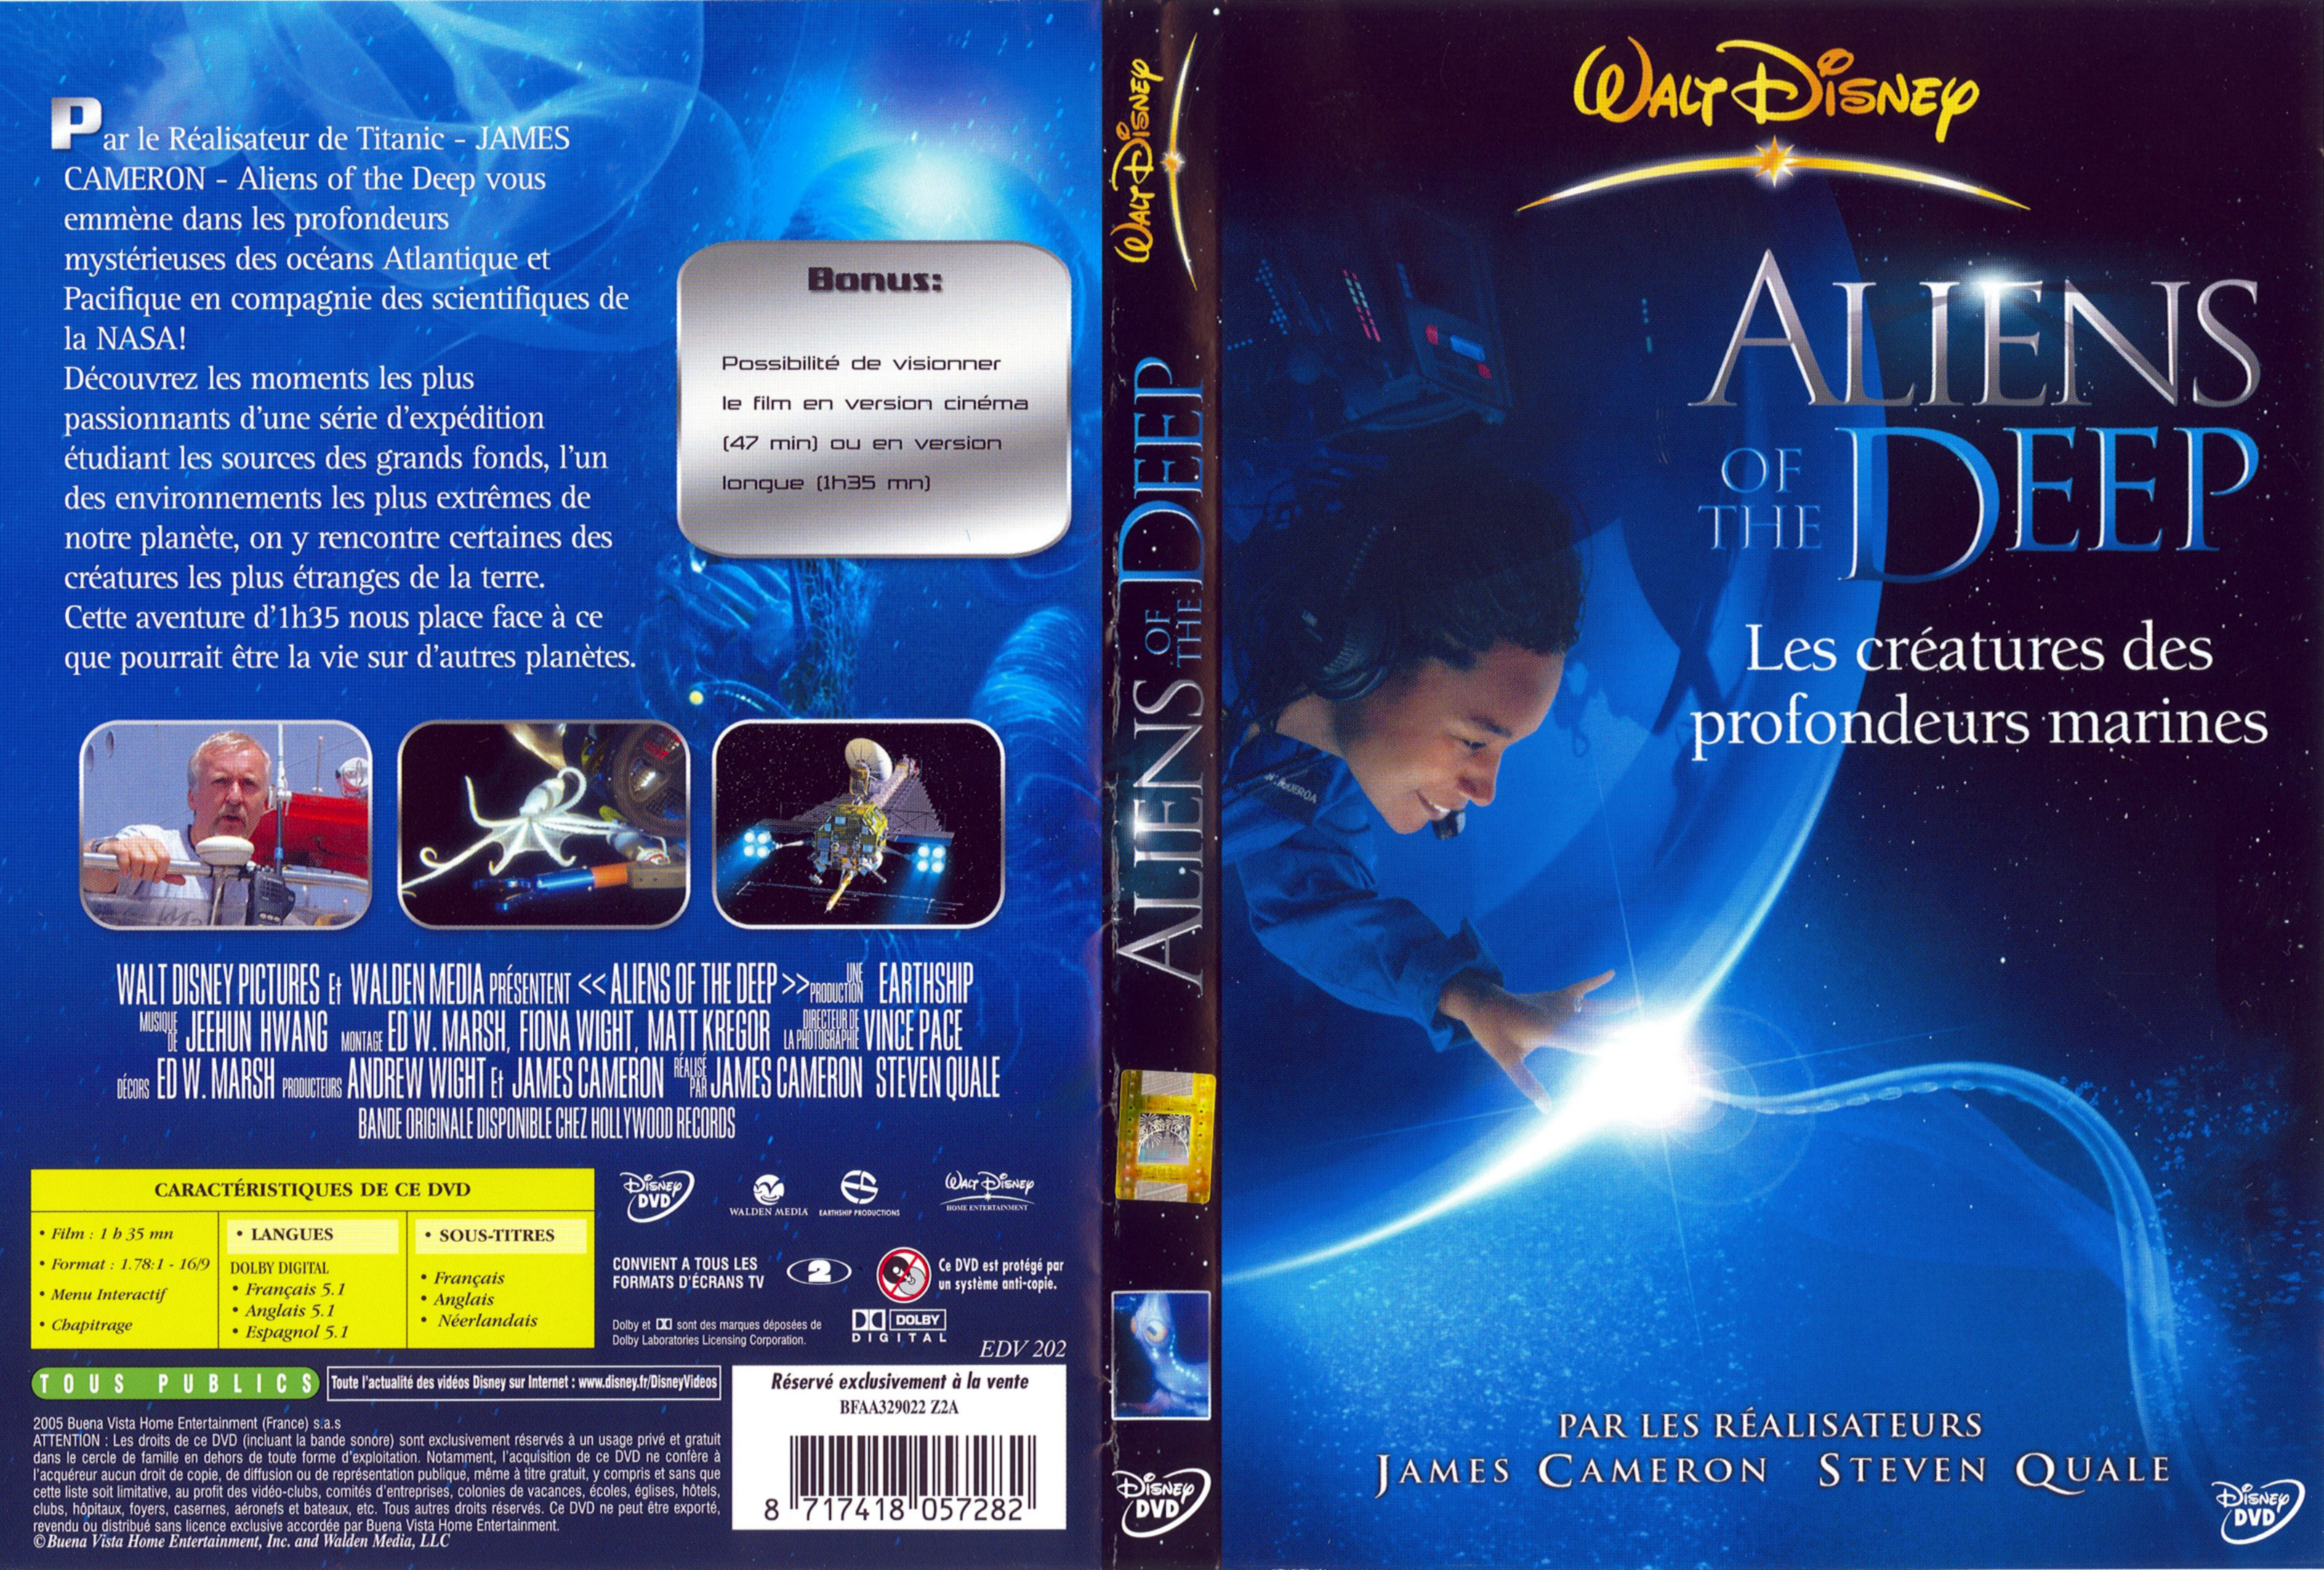 Jaquette DVD Alien of the deep